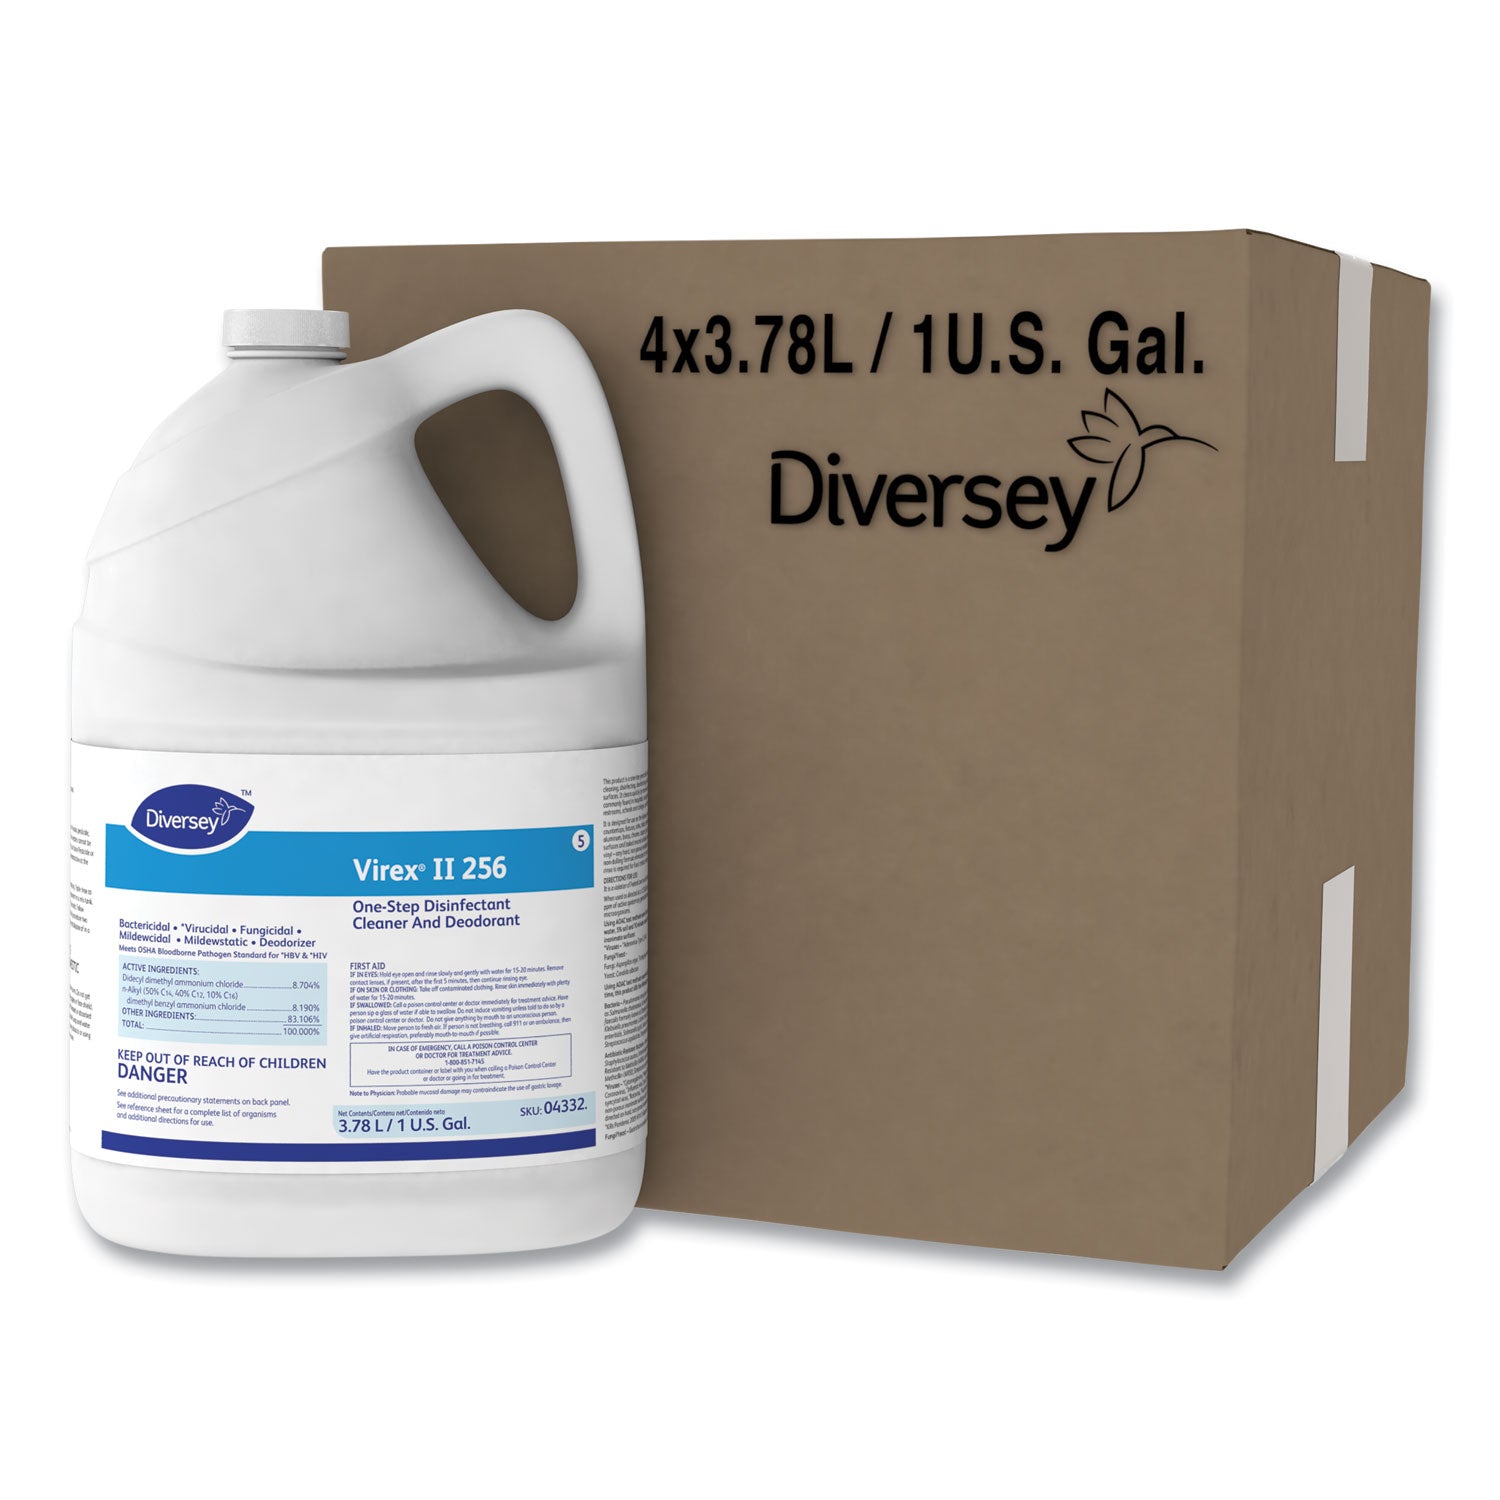 virex-ii-256-one-step-disinfectant-cleaner-deodorant-mint-1-gal-4-bottles-ct_dvo04332 - 6